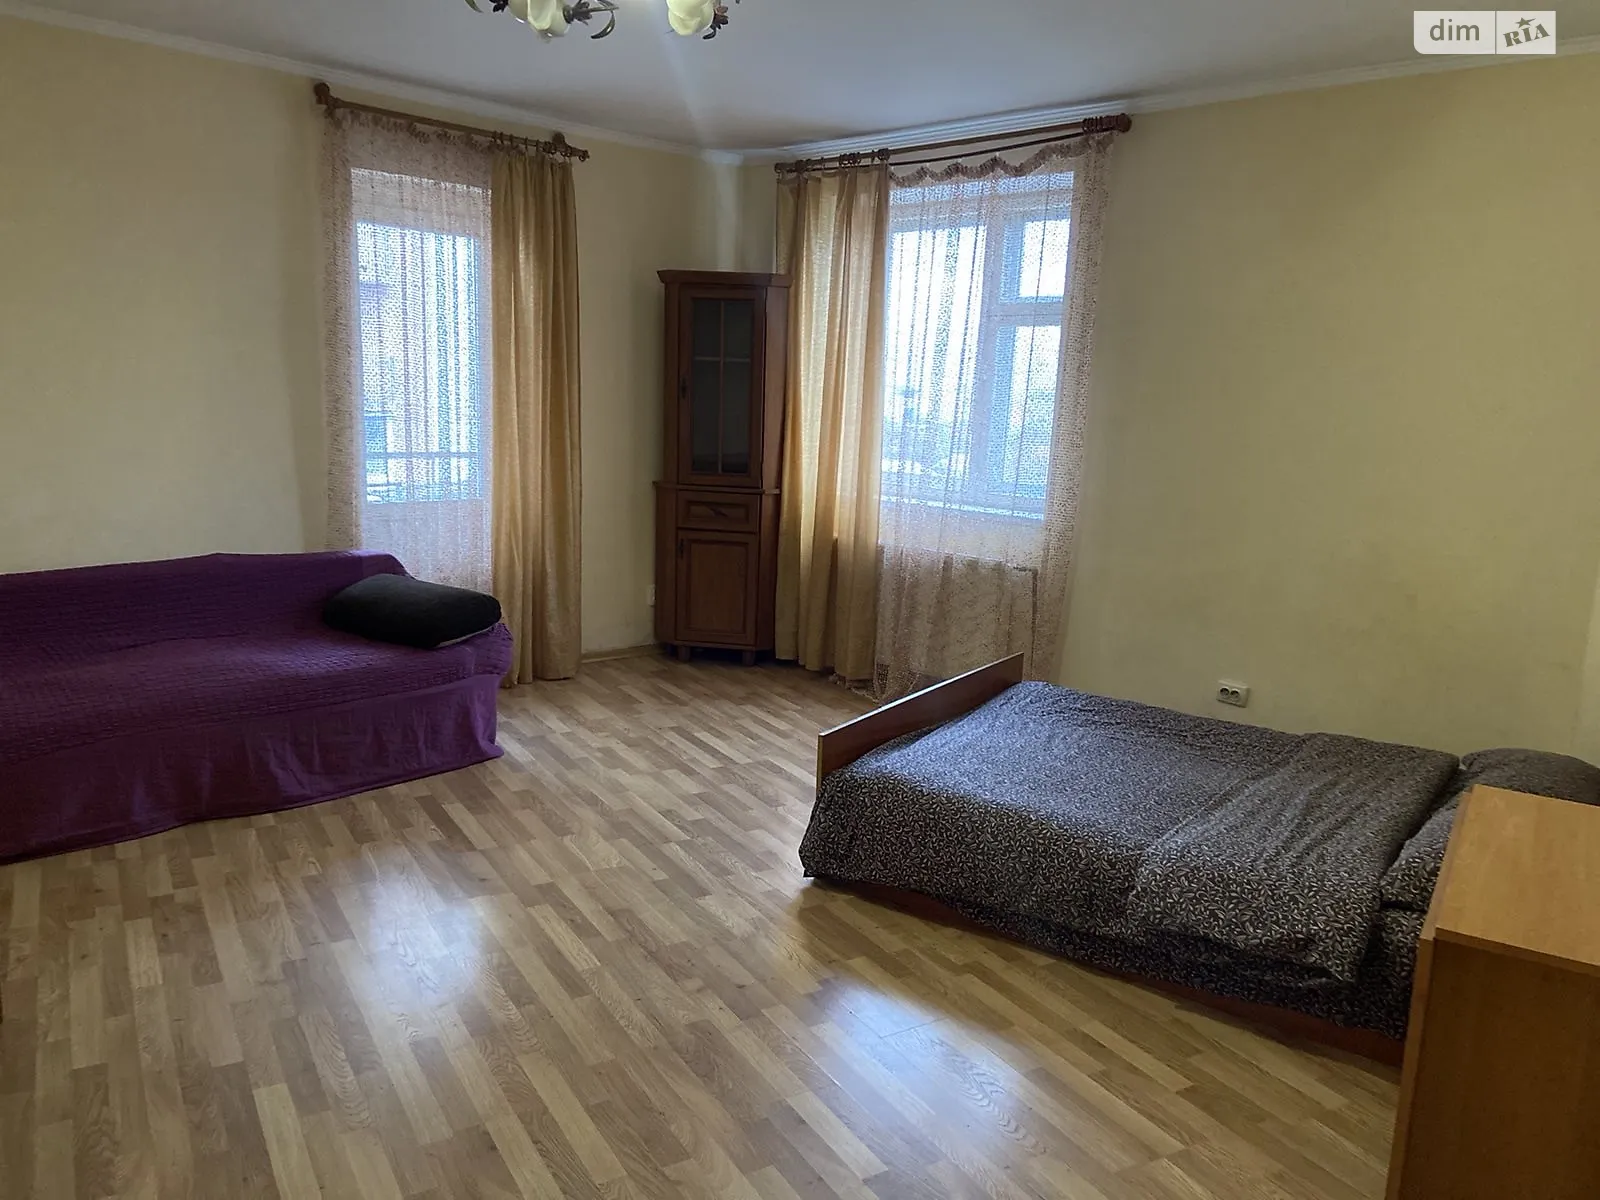 2-кімнатна квартира у Тернополі, цена: 750 грн - фото 1